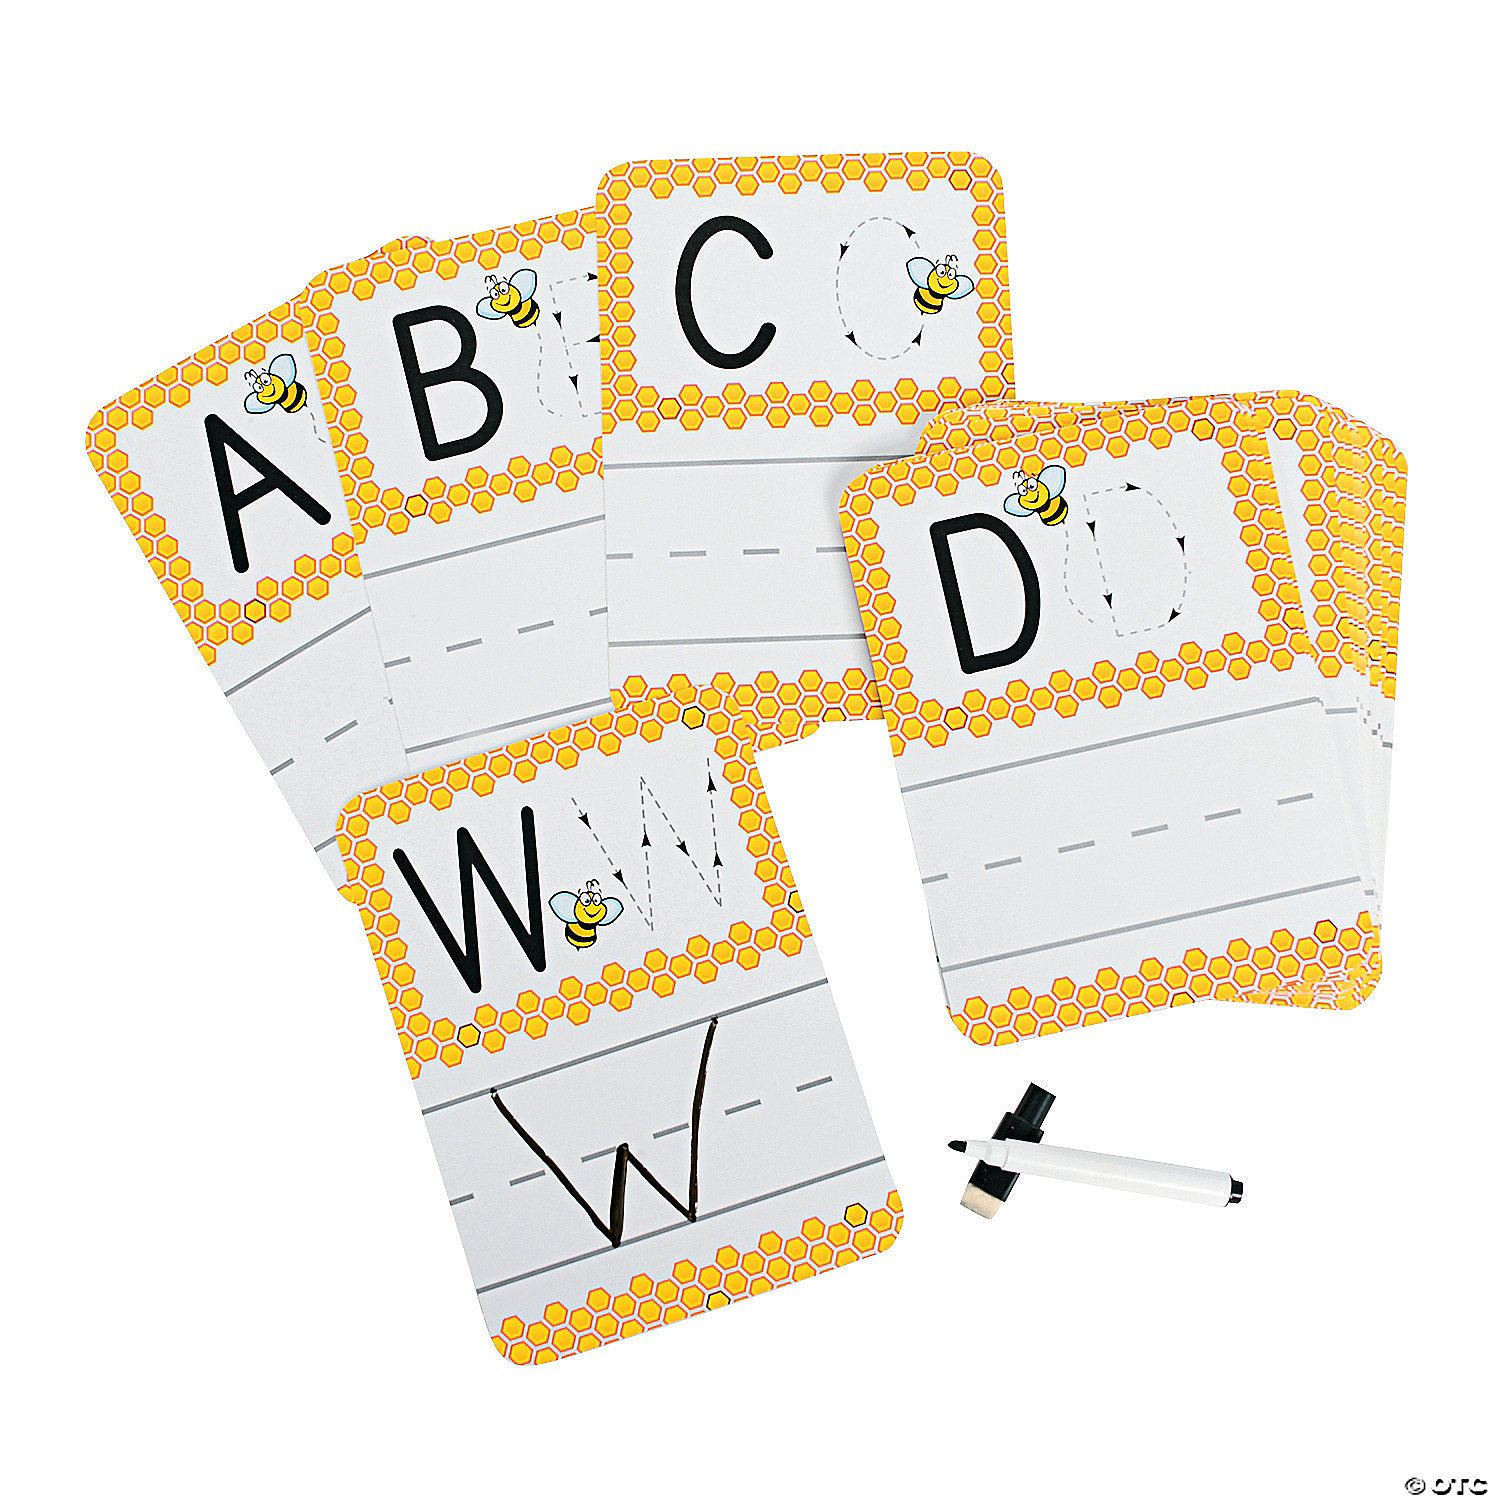 Teacher Resource Alphabet 2-Sided Dry Erase Practice Cards